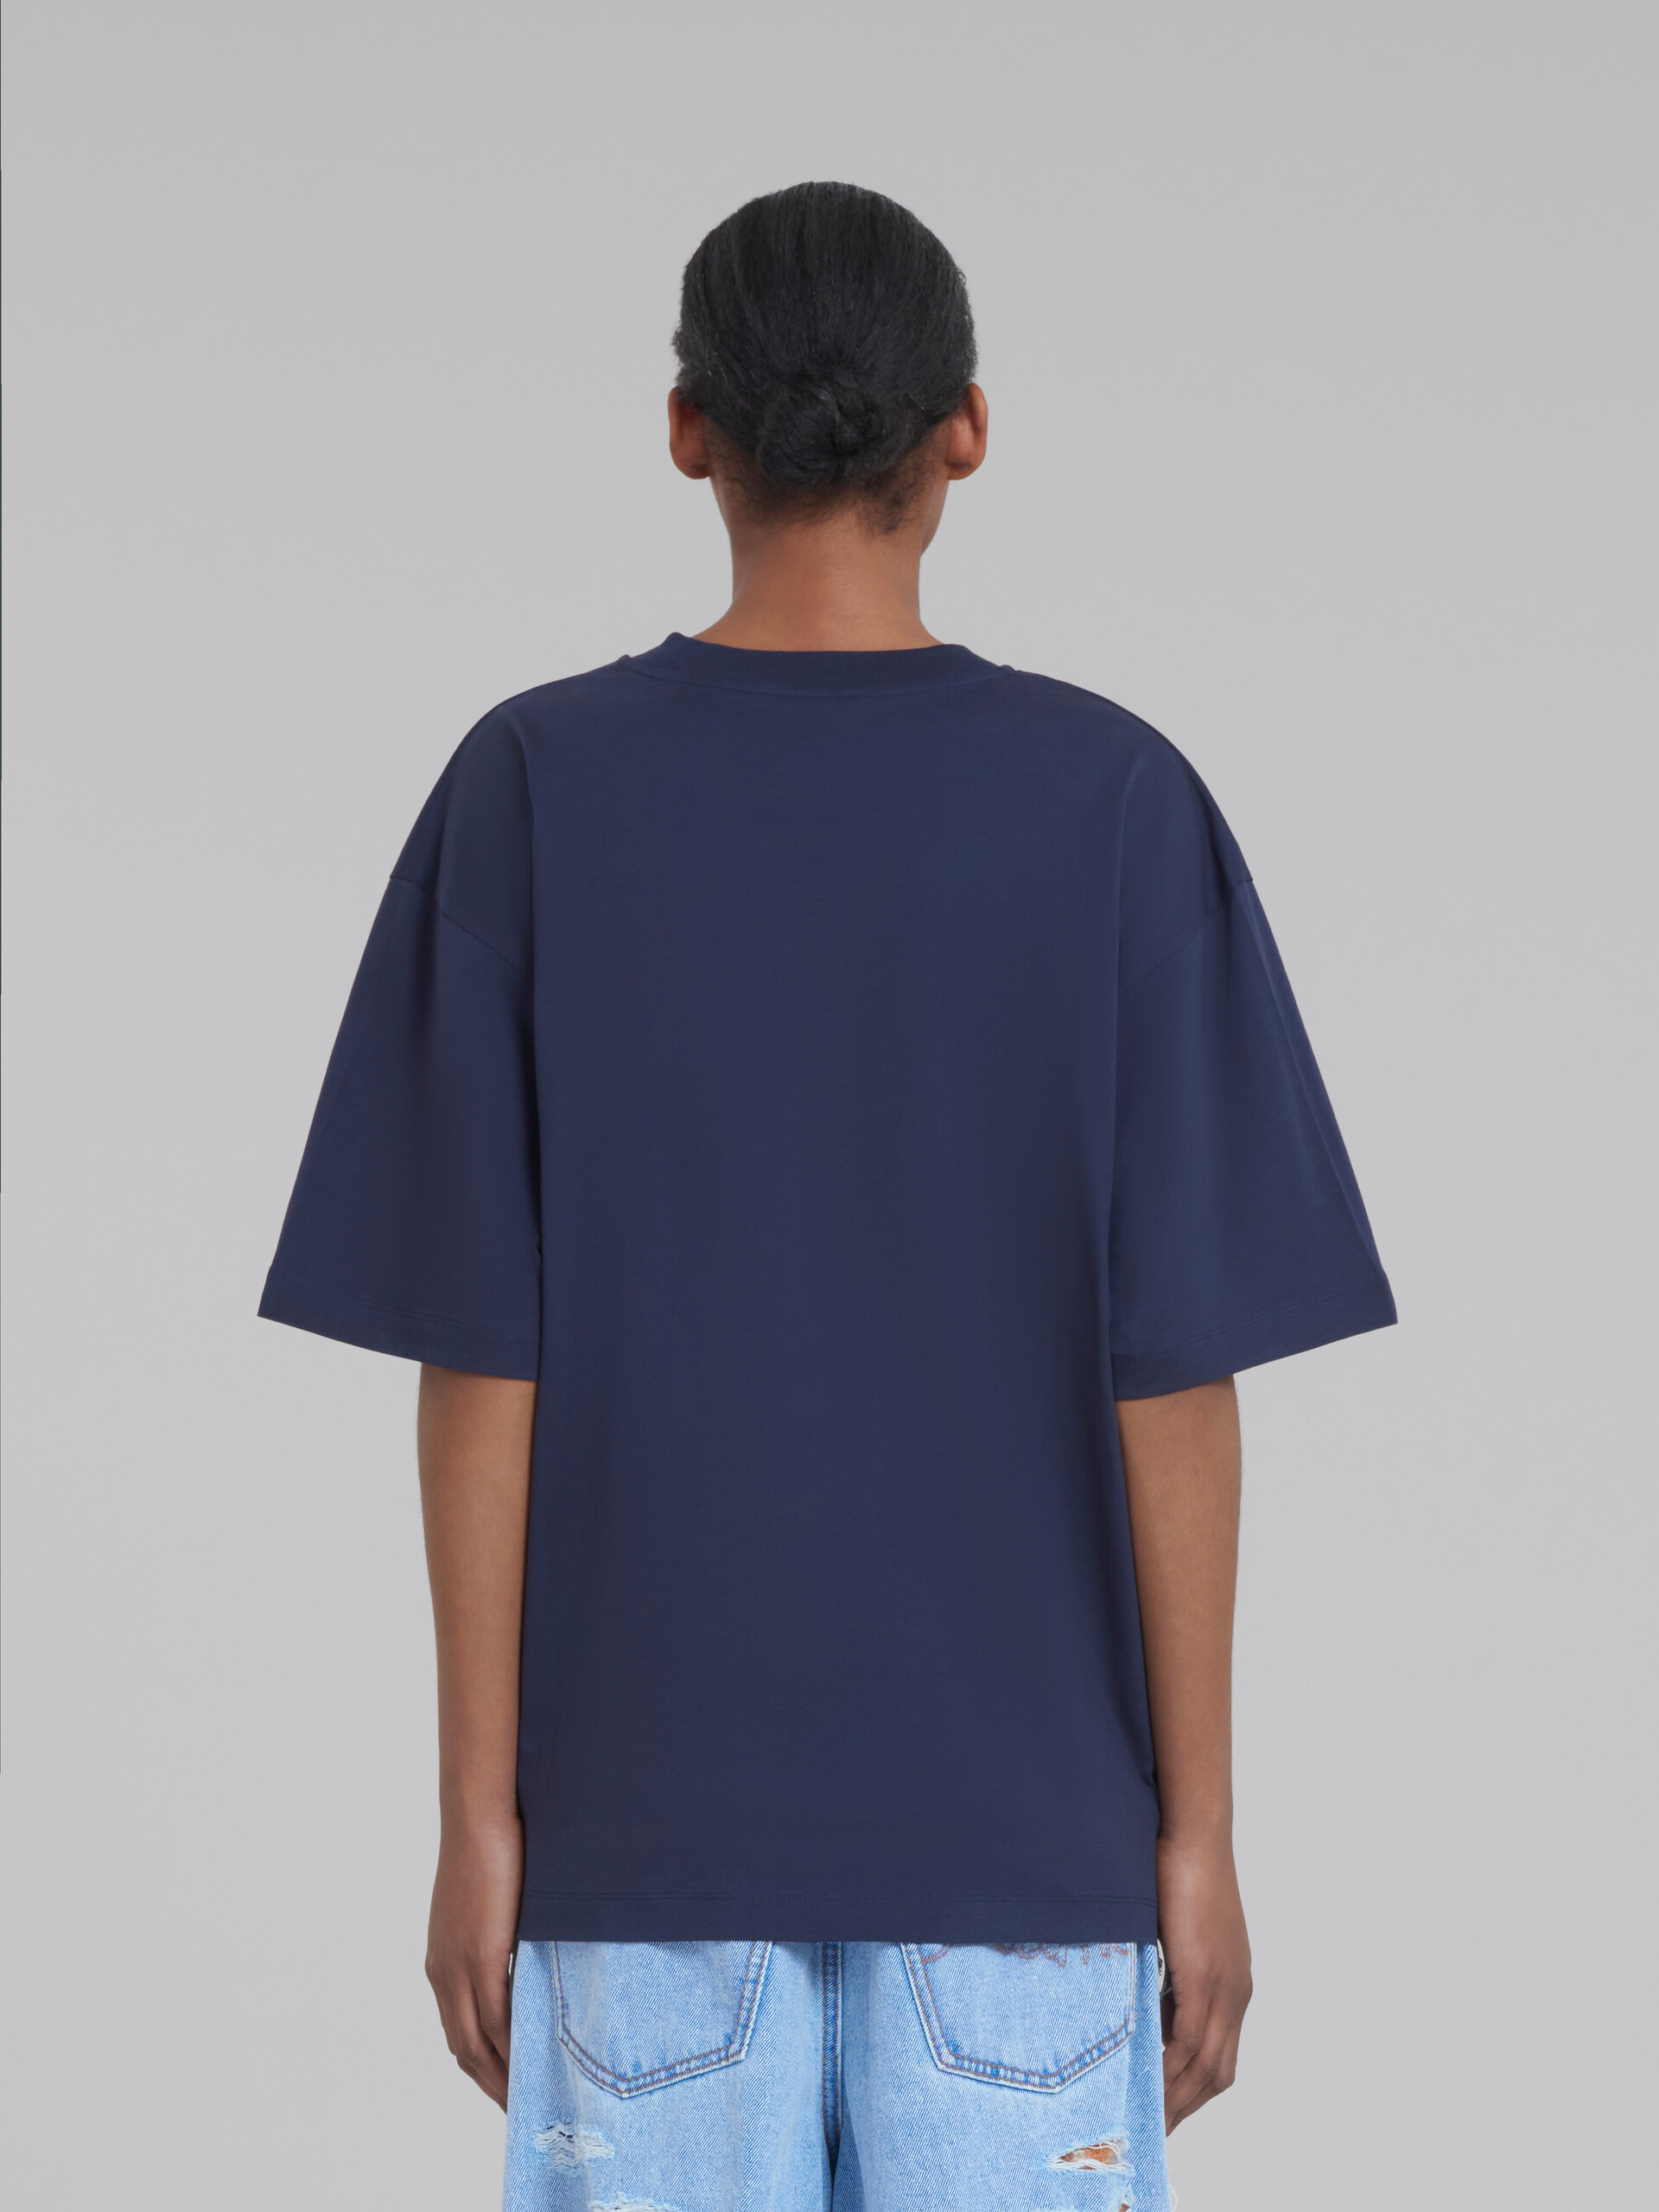 Camiseta azul de algodón ecológico con logotipo - Camisetas - Image 3